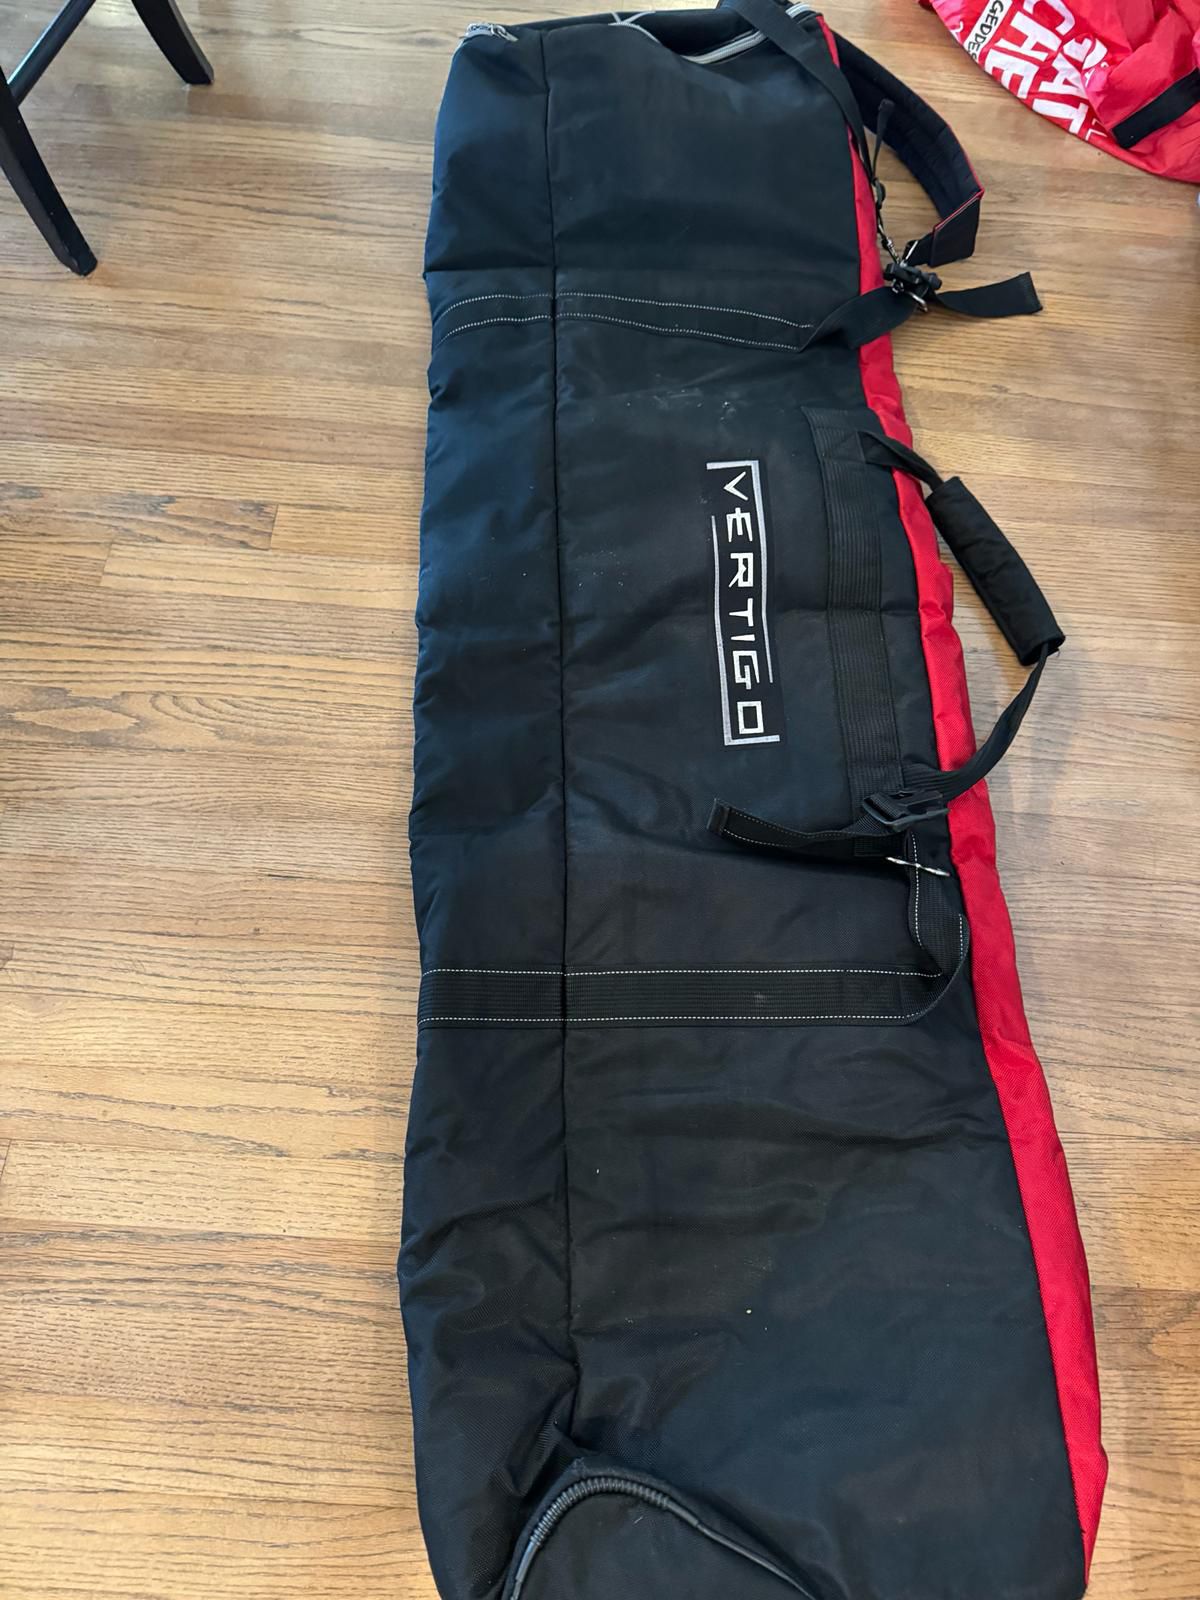 Vertigo Snowboard Bag